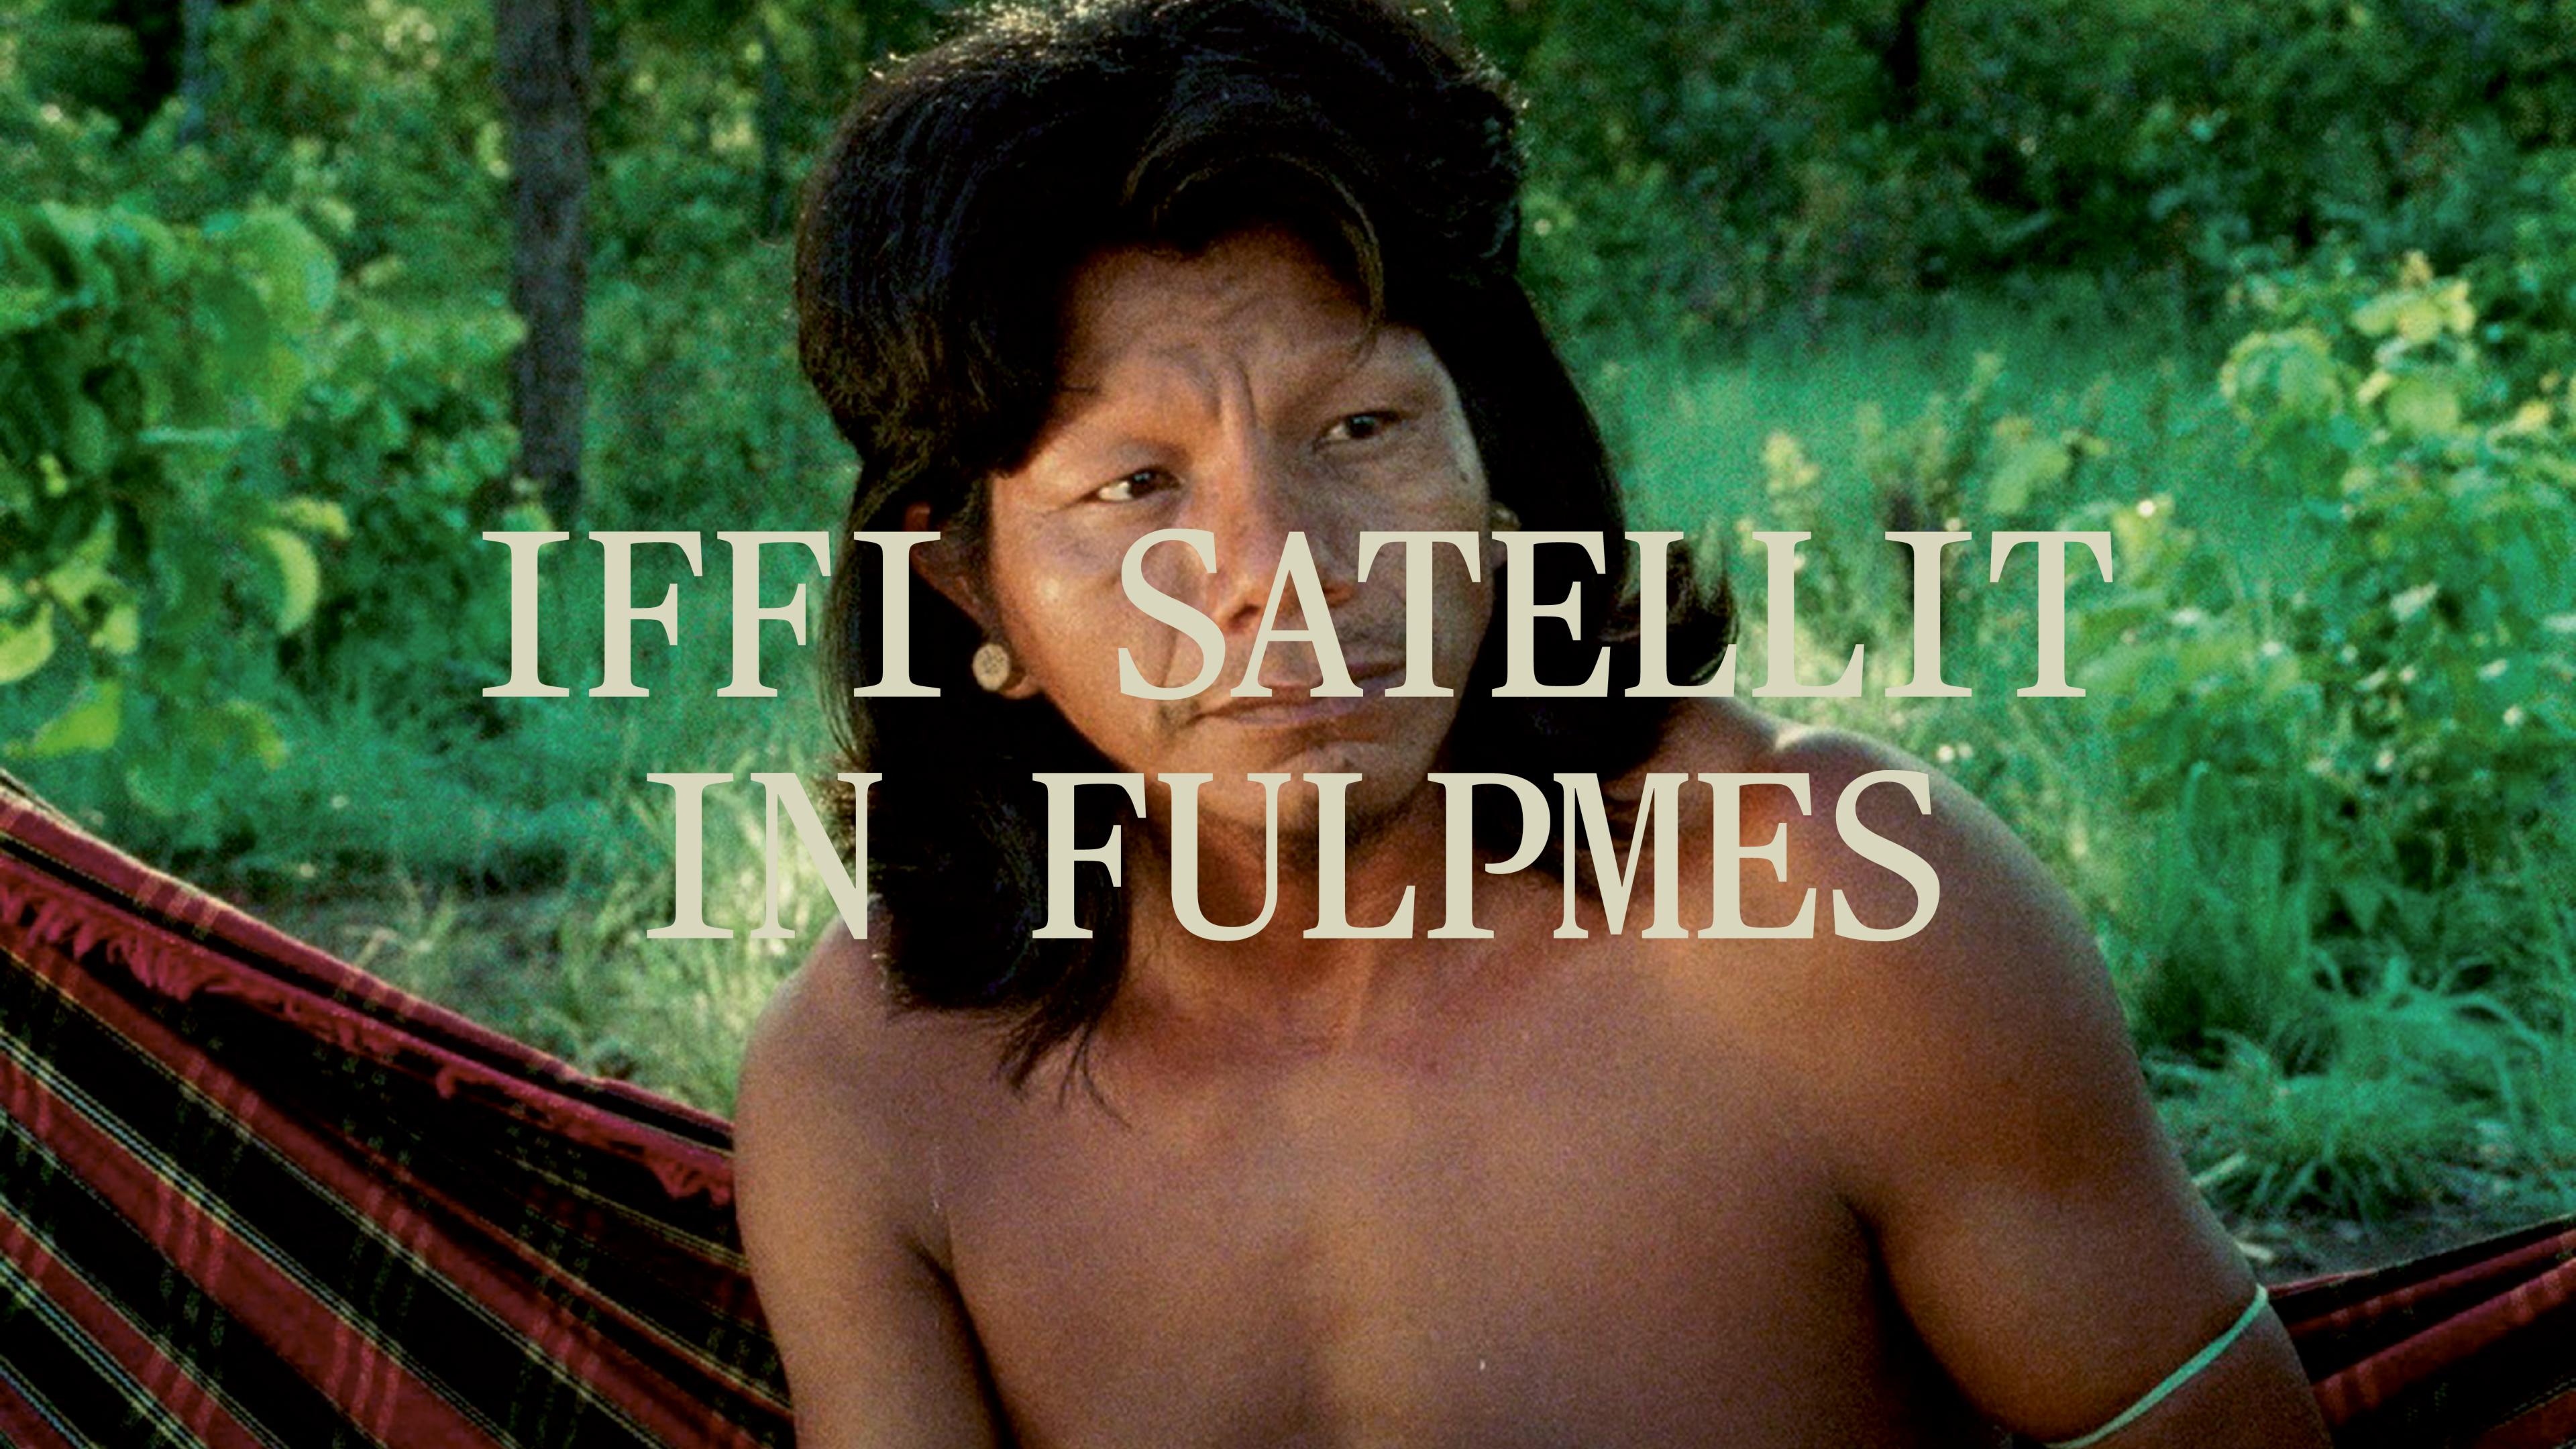 IFFI Satellite in Fulpmes